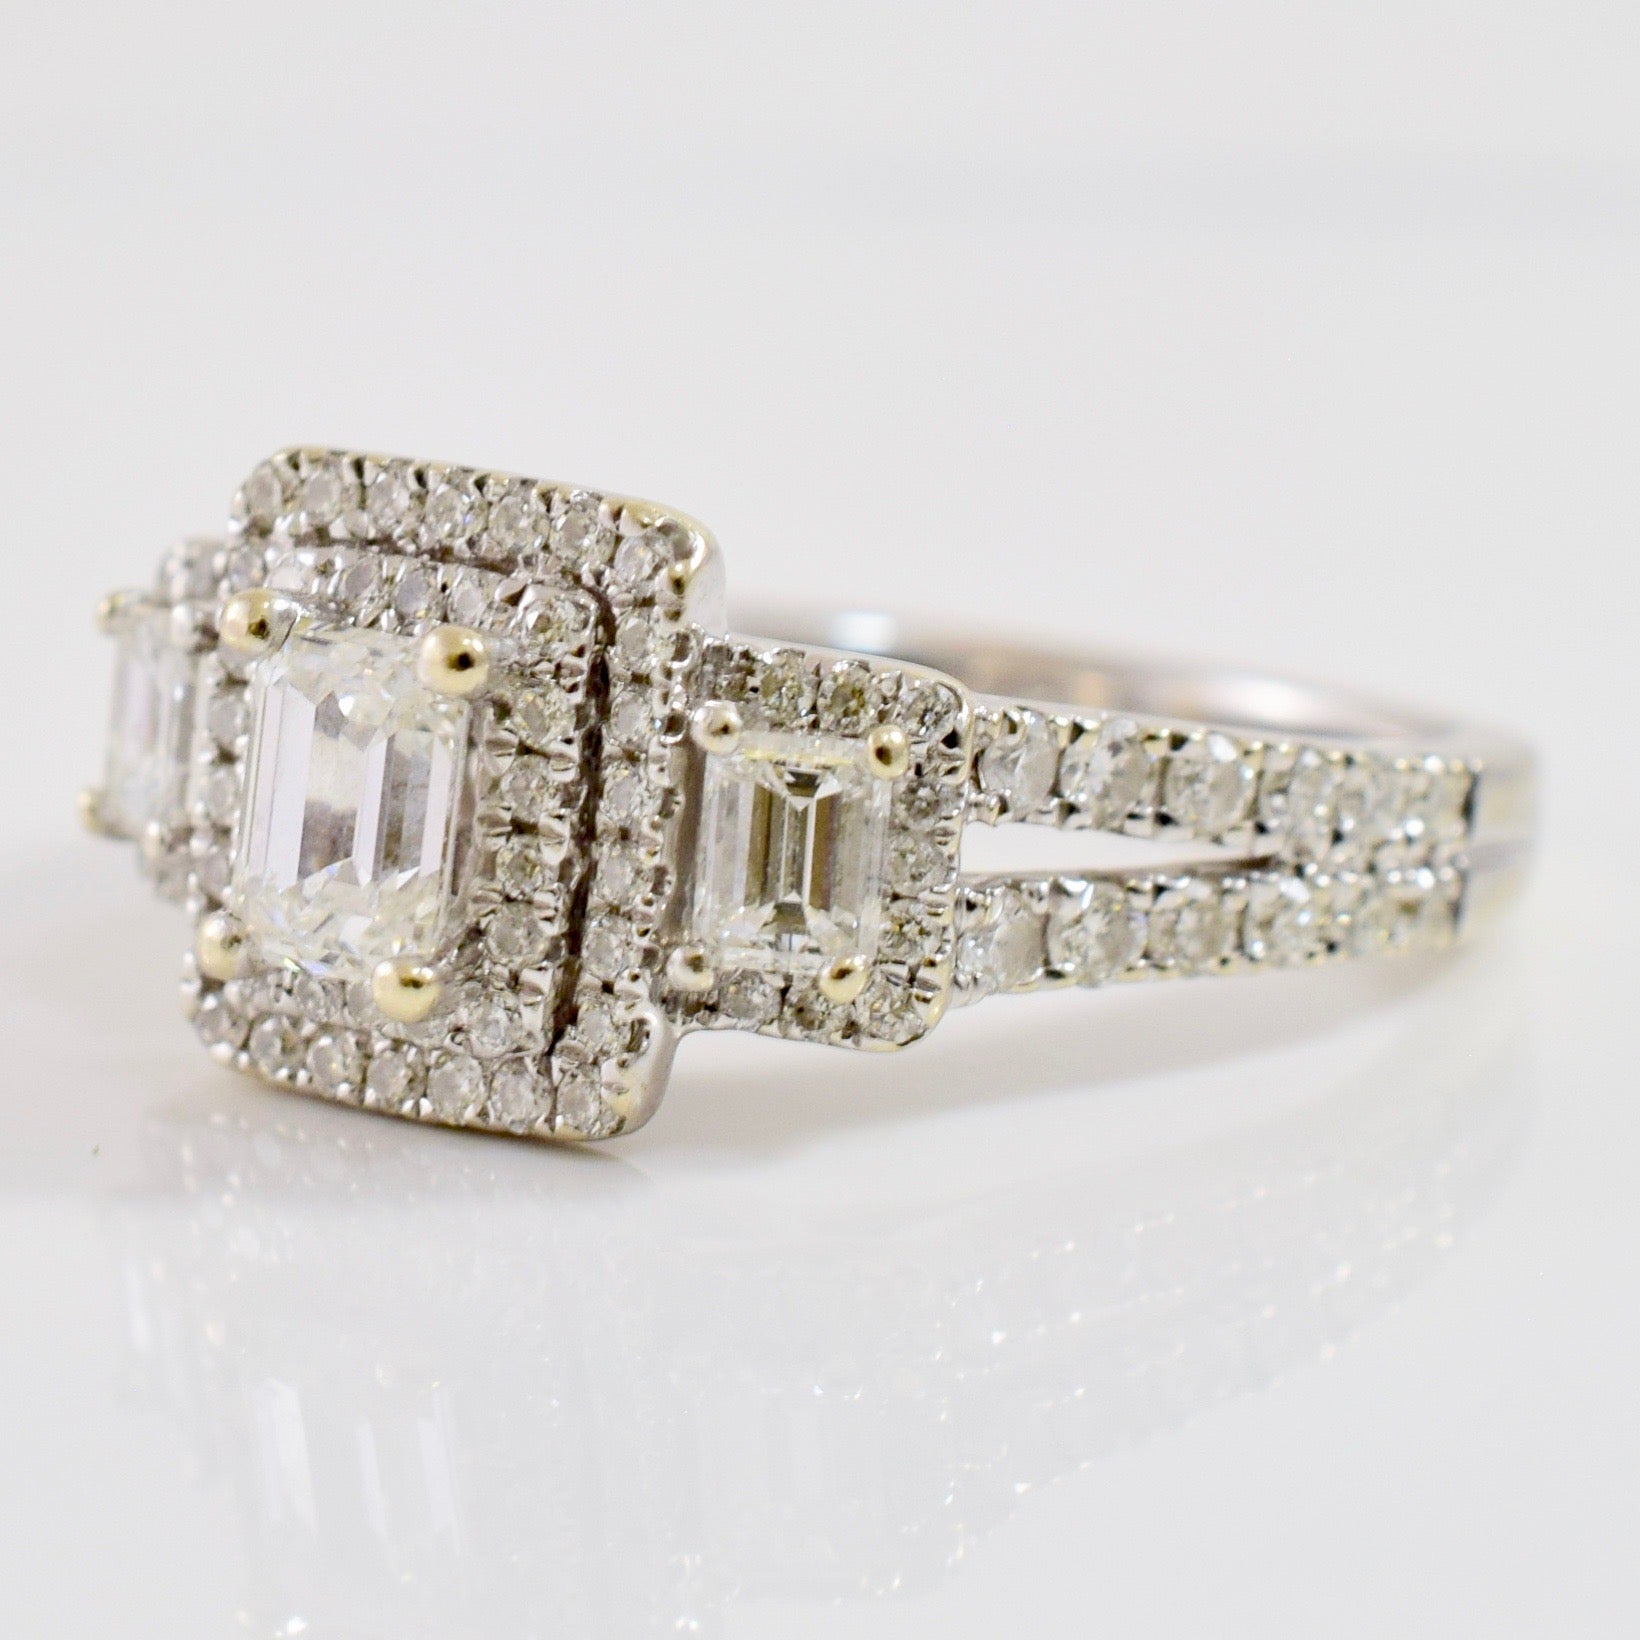 'Vera Wang' Love Collection Diamond Engagement Ring | 1.15 ctw SZ 5.5 |